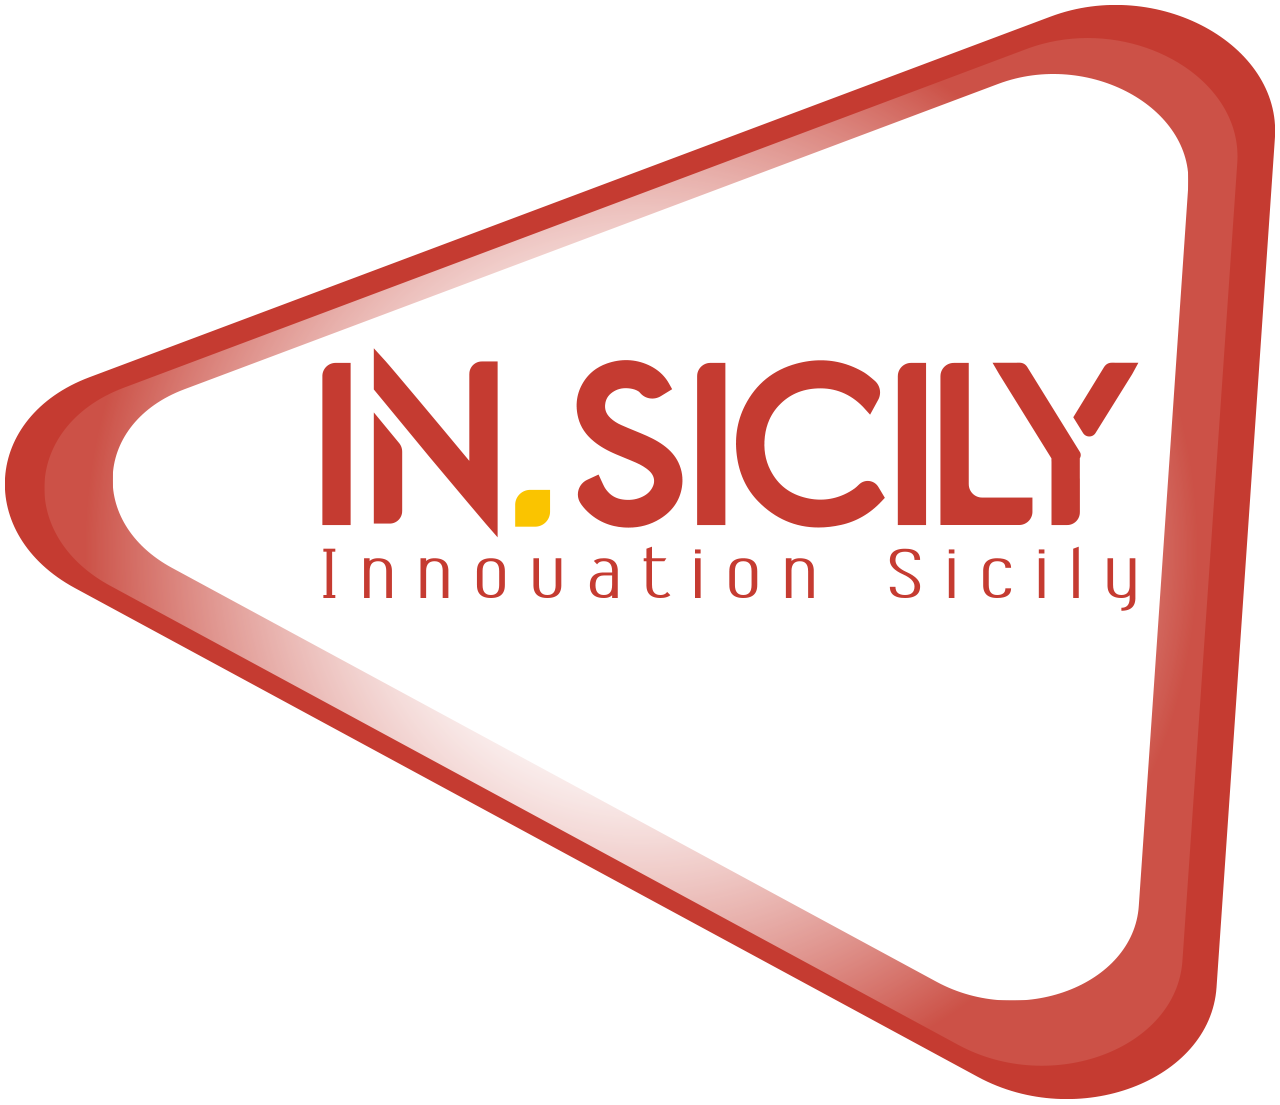 IN.SICILY - Innovation Sicily - Password Dimenticata